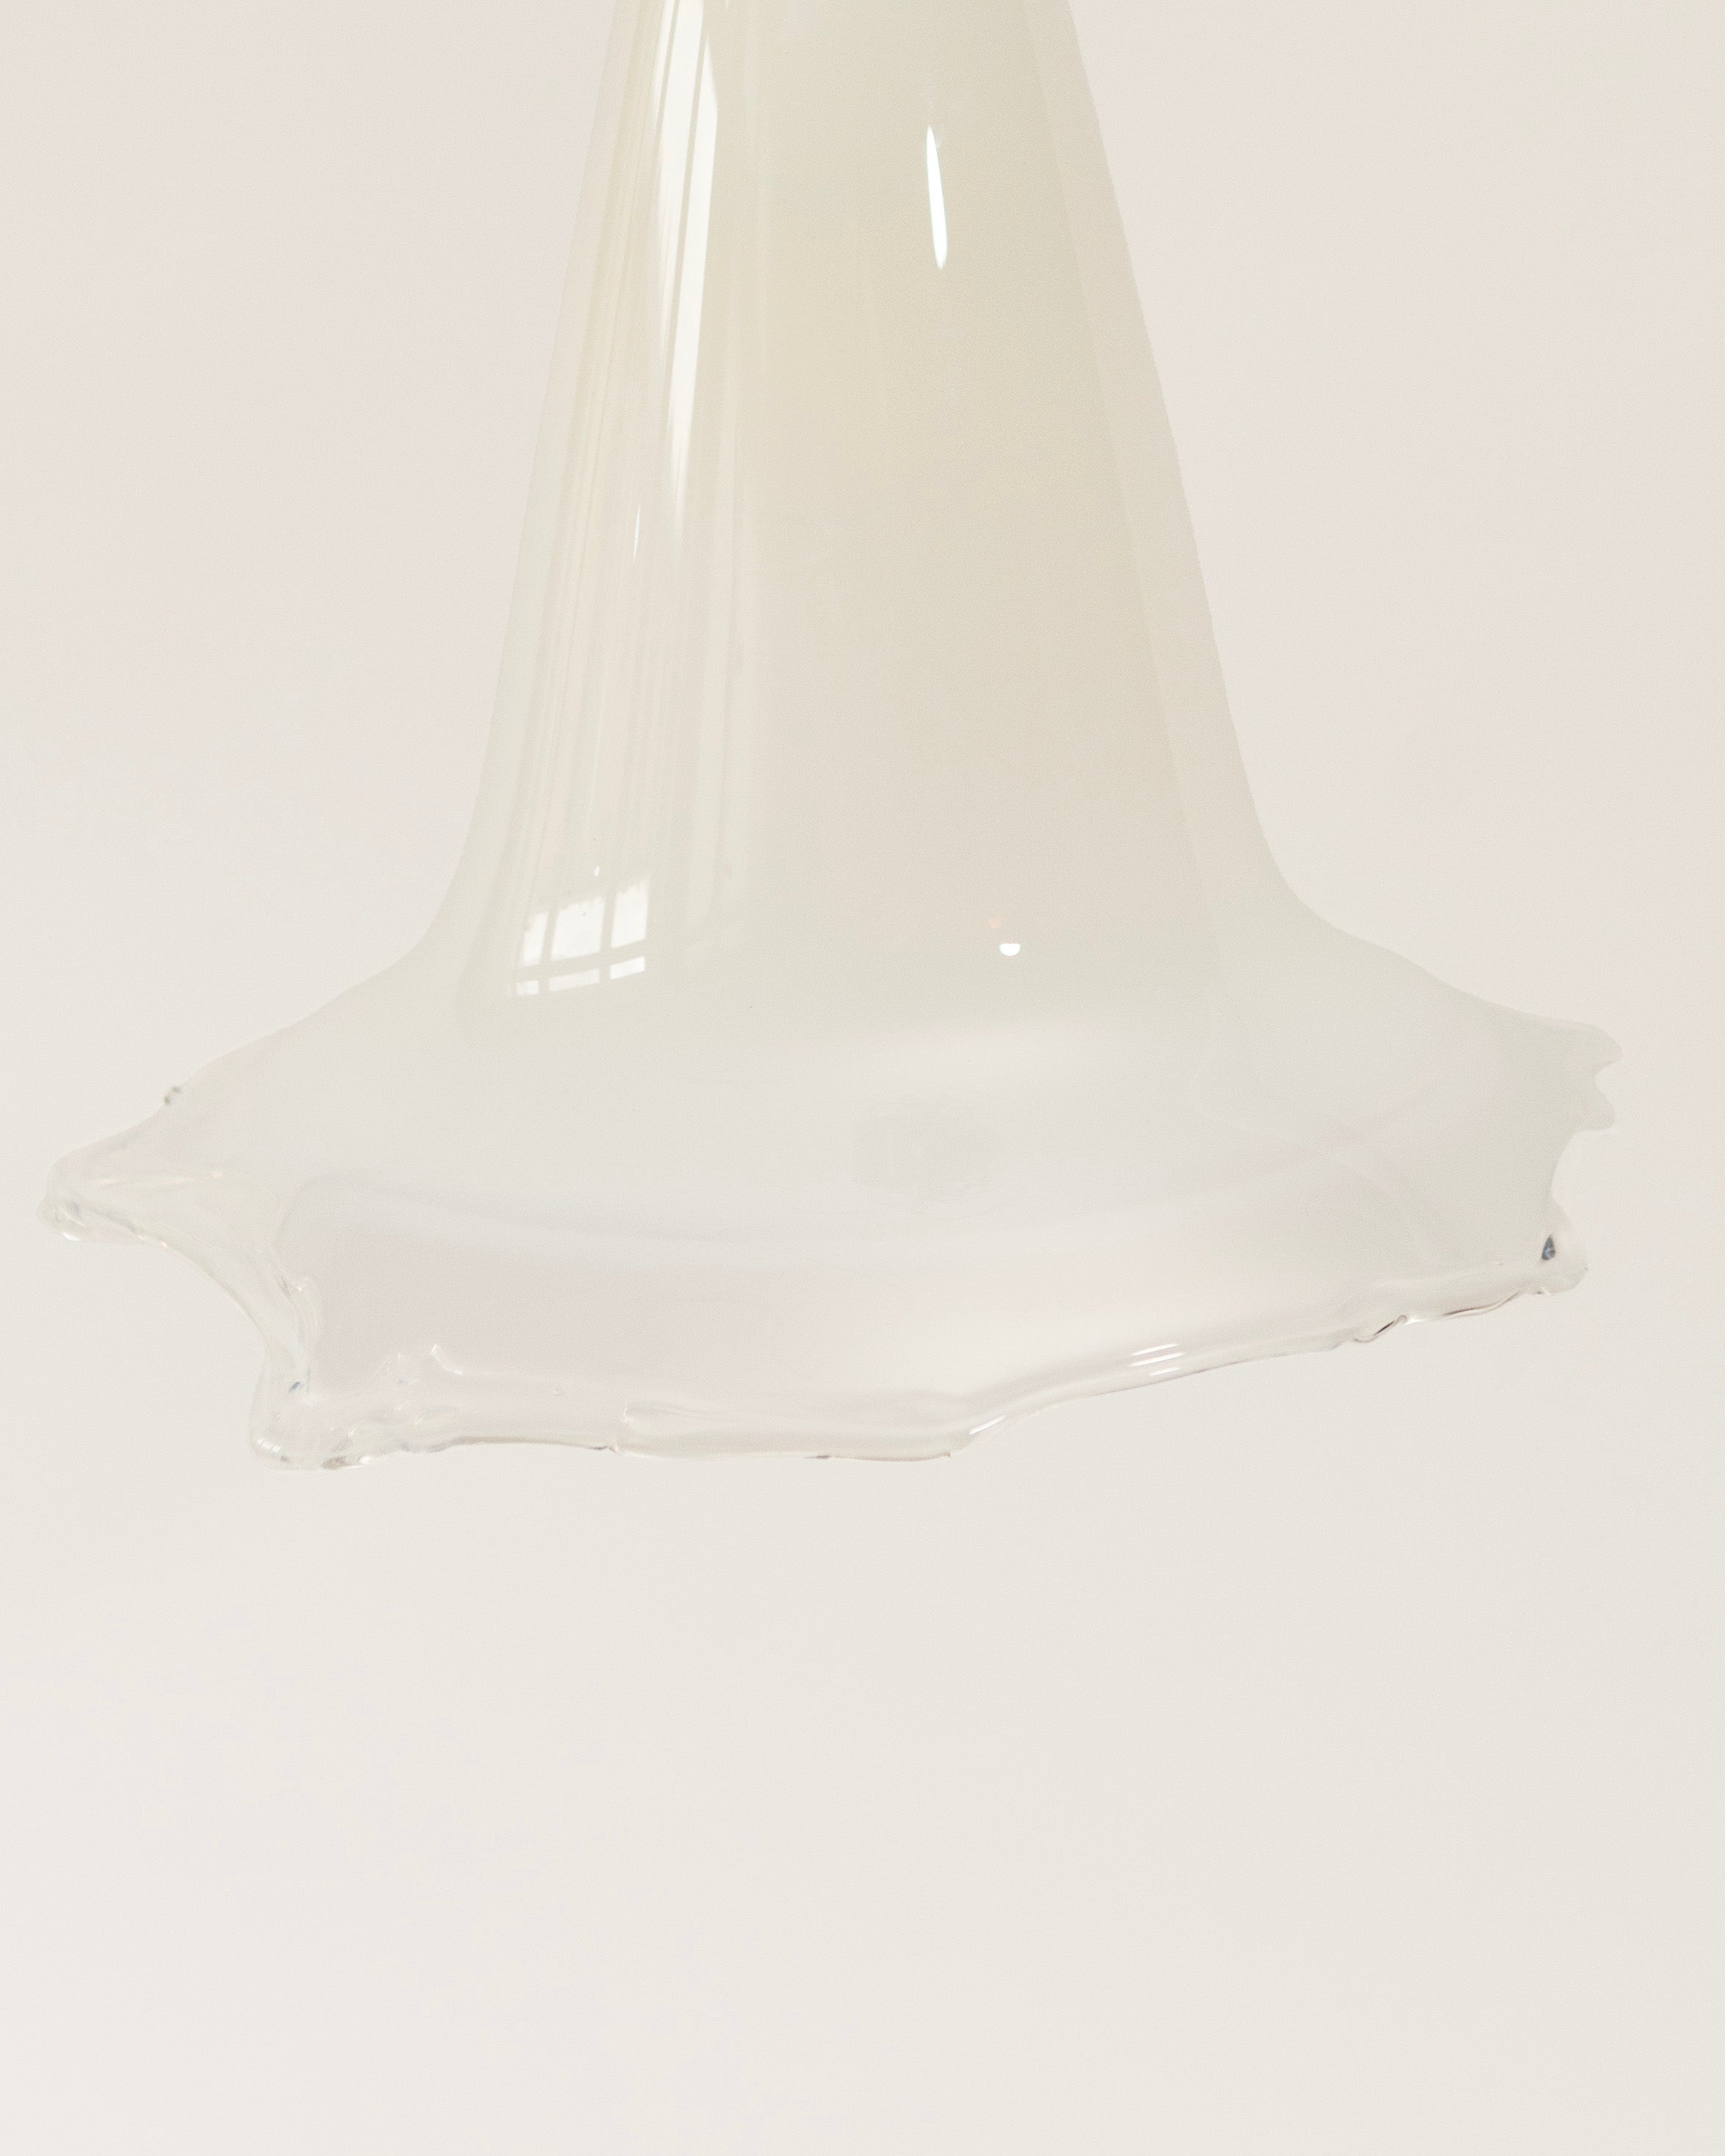 M. BREYEN: LAMP